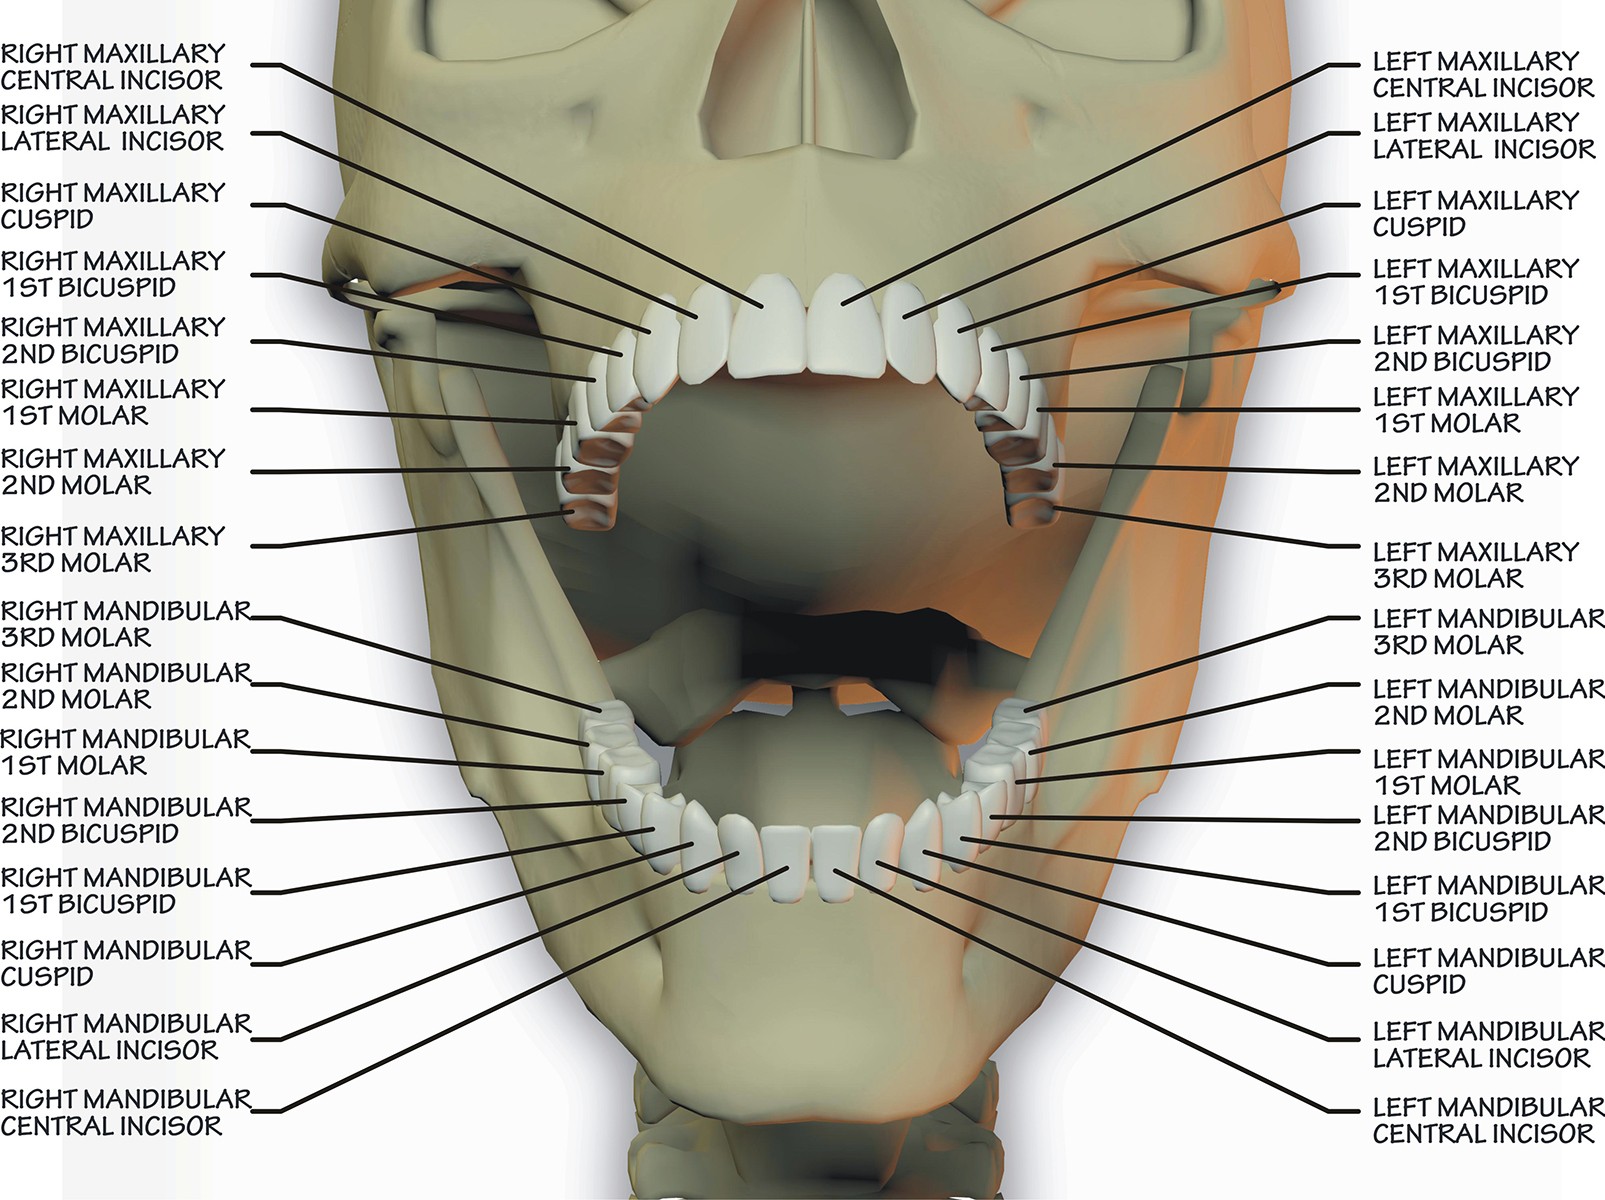 Difference Between Maxillary And Mandibular Molars